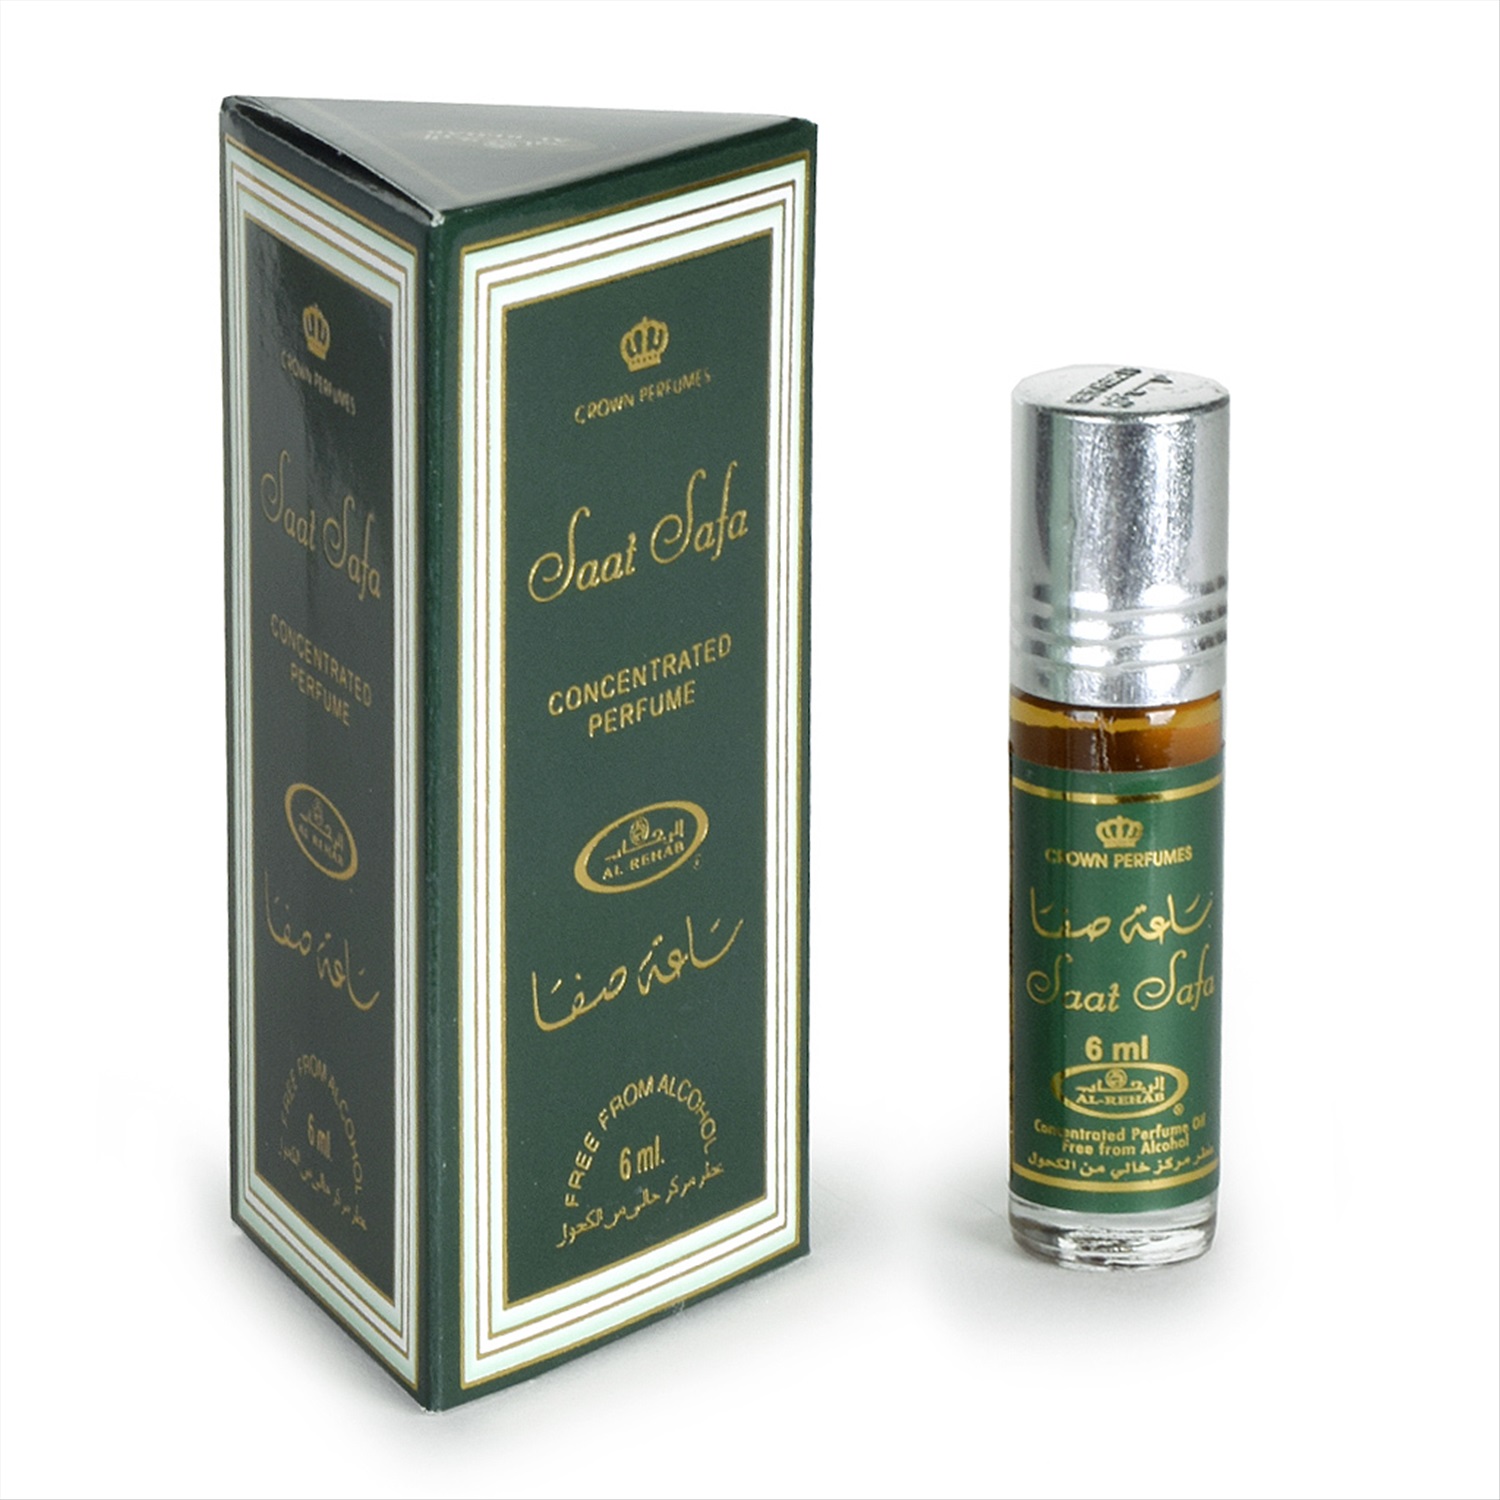 Al-Rehab Concentrated Perfume SAAT SAFA (Масляные арабские духи СААТ САФА (унисекс), Аль-Рехаб), 6 мл.